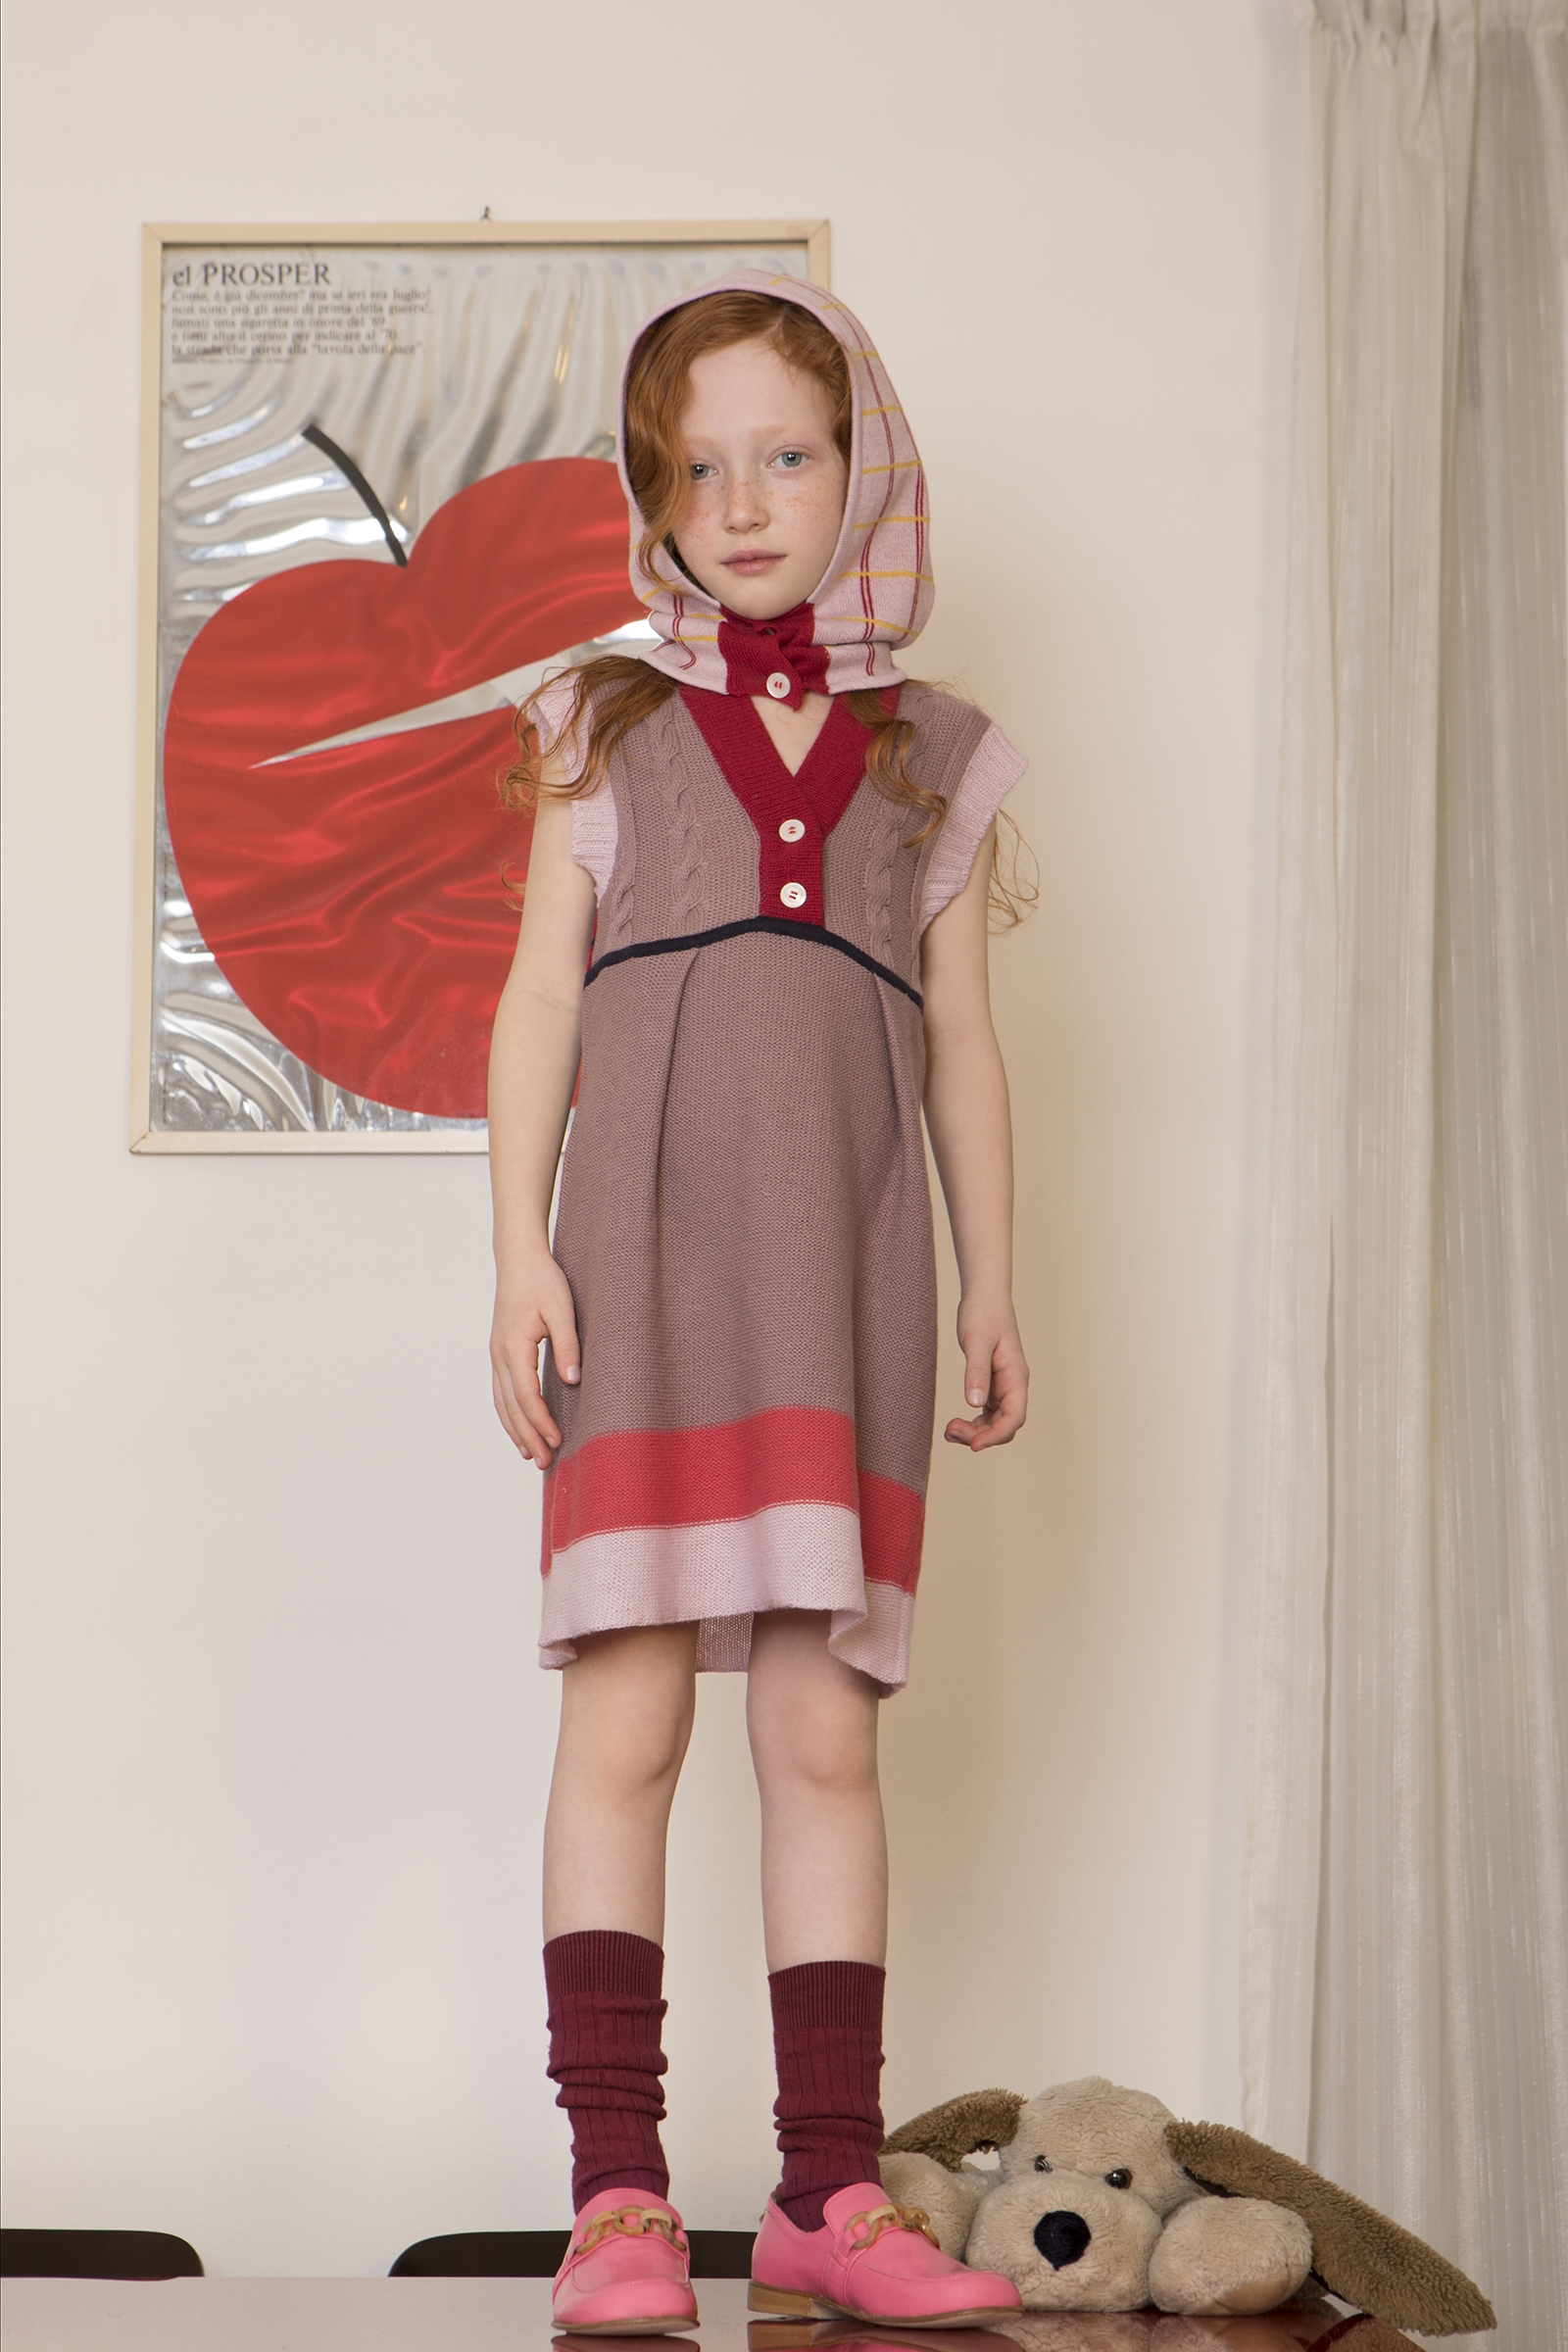 LIGNE NOIRE is a contemporary fashion label for kids